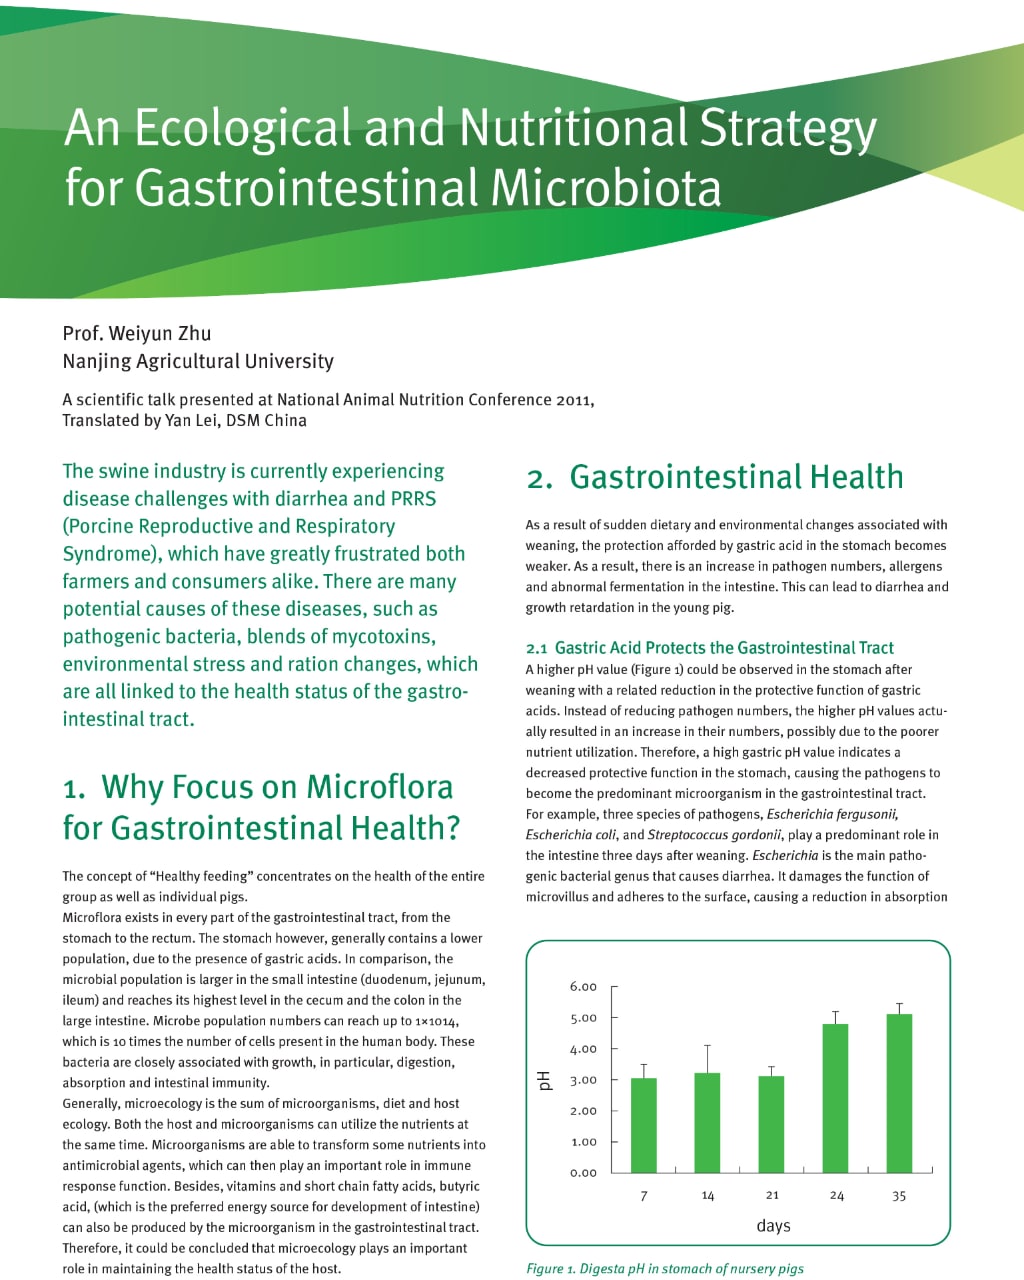  Nutritional Strategy for Gastrointestinal Microbiota